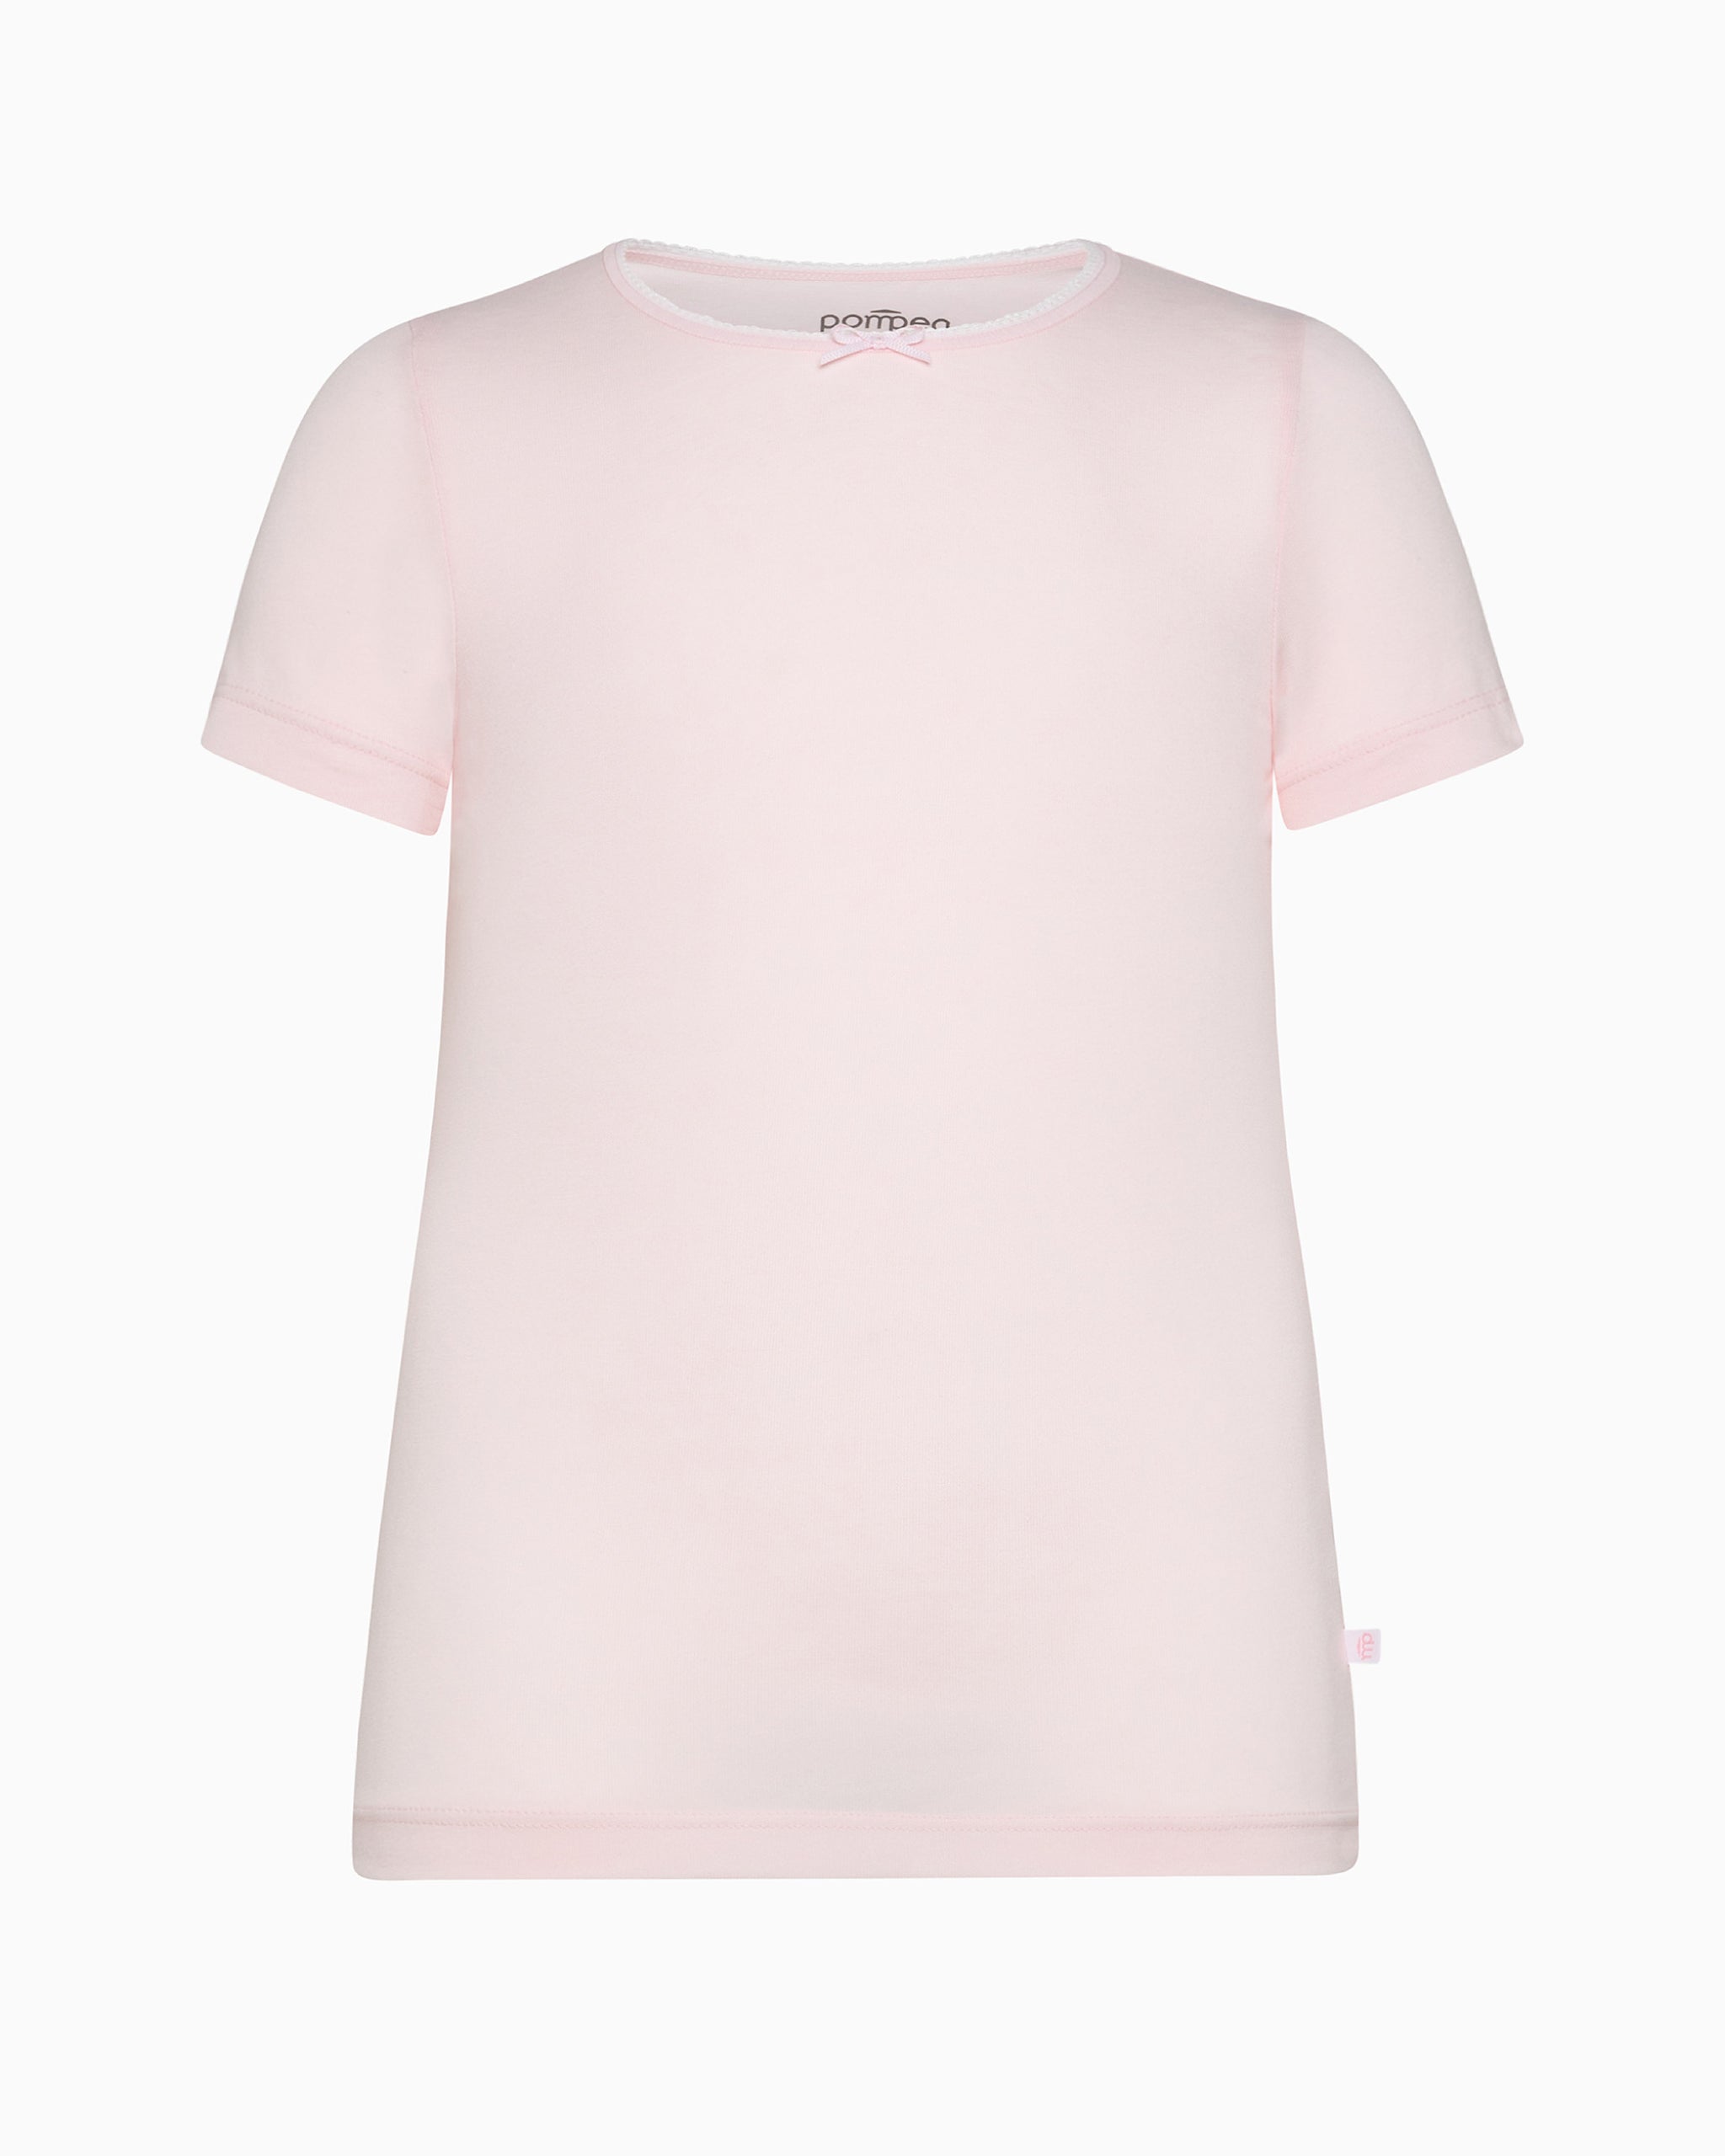 Girls' organic cotton crew neck T-shirt vest